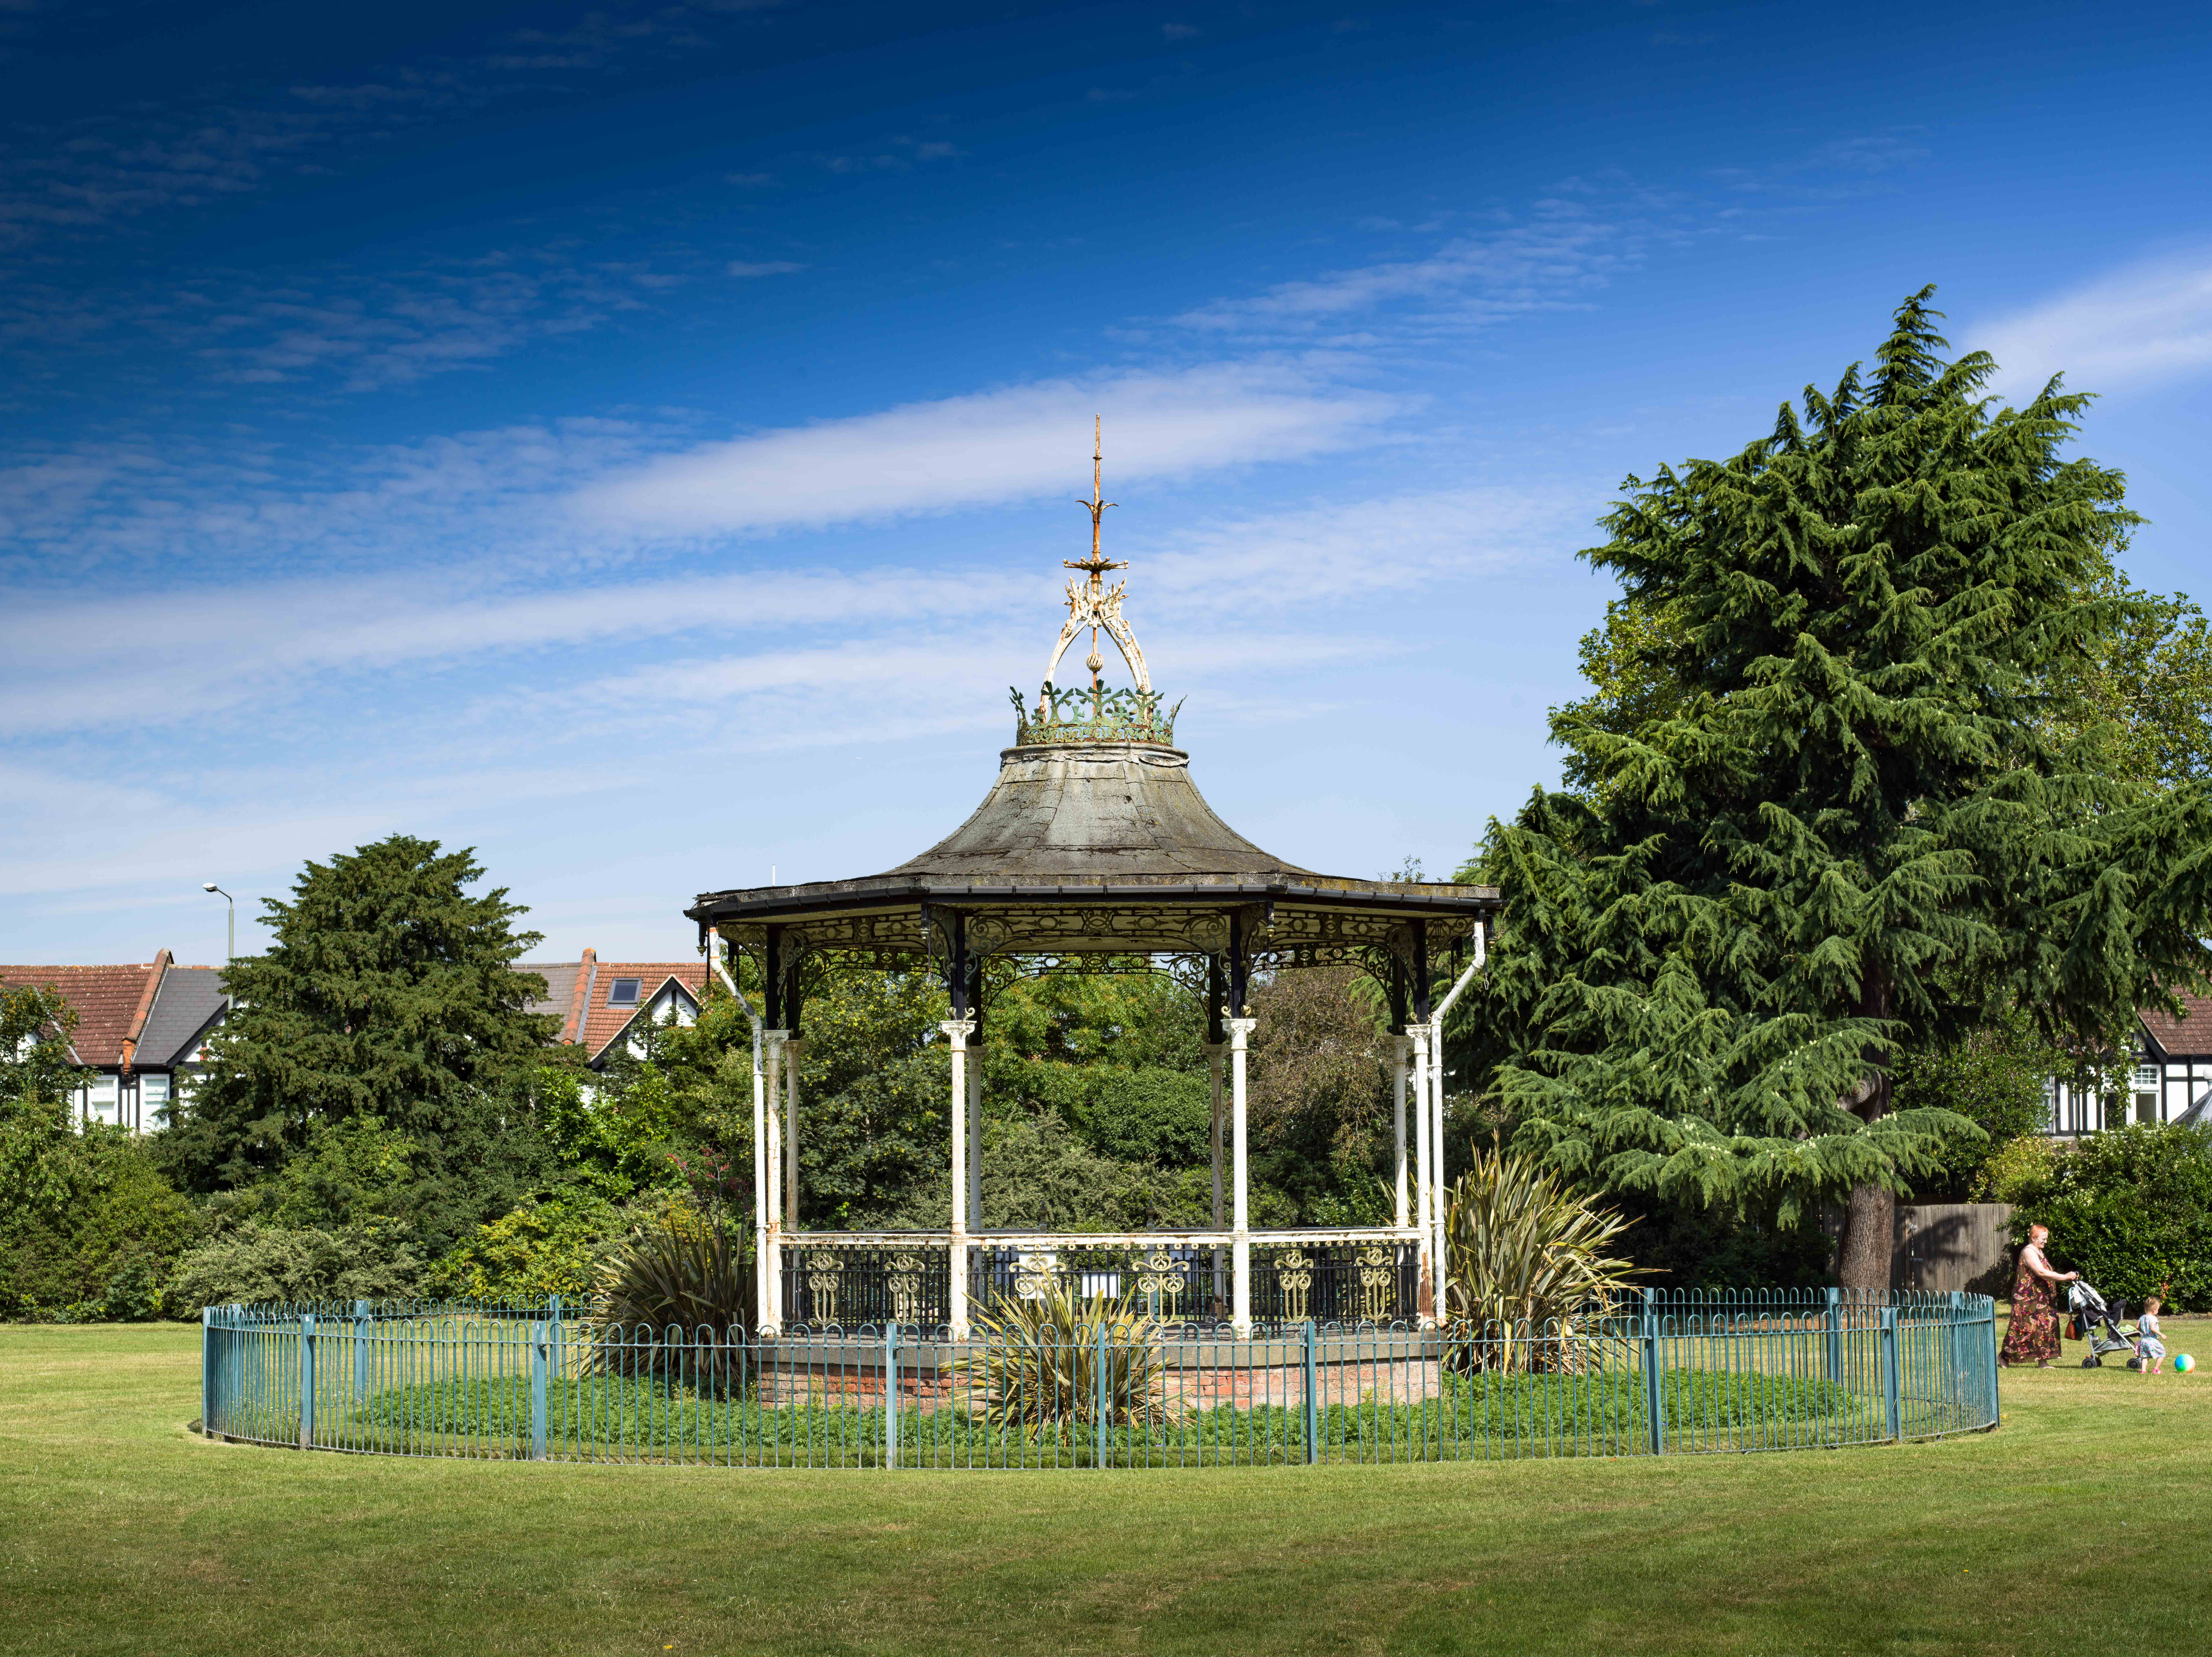 The 'Bowie bandstand' in Beckenham